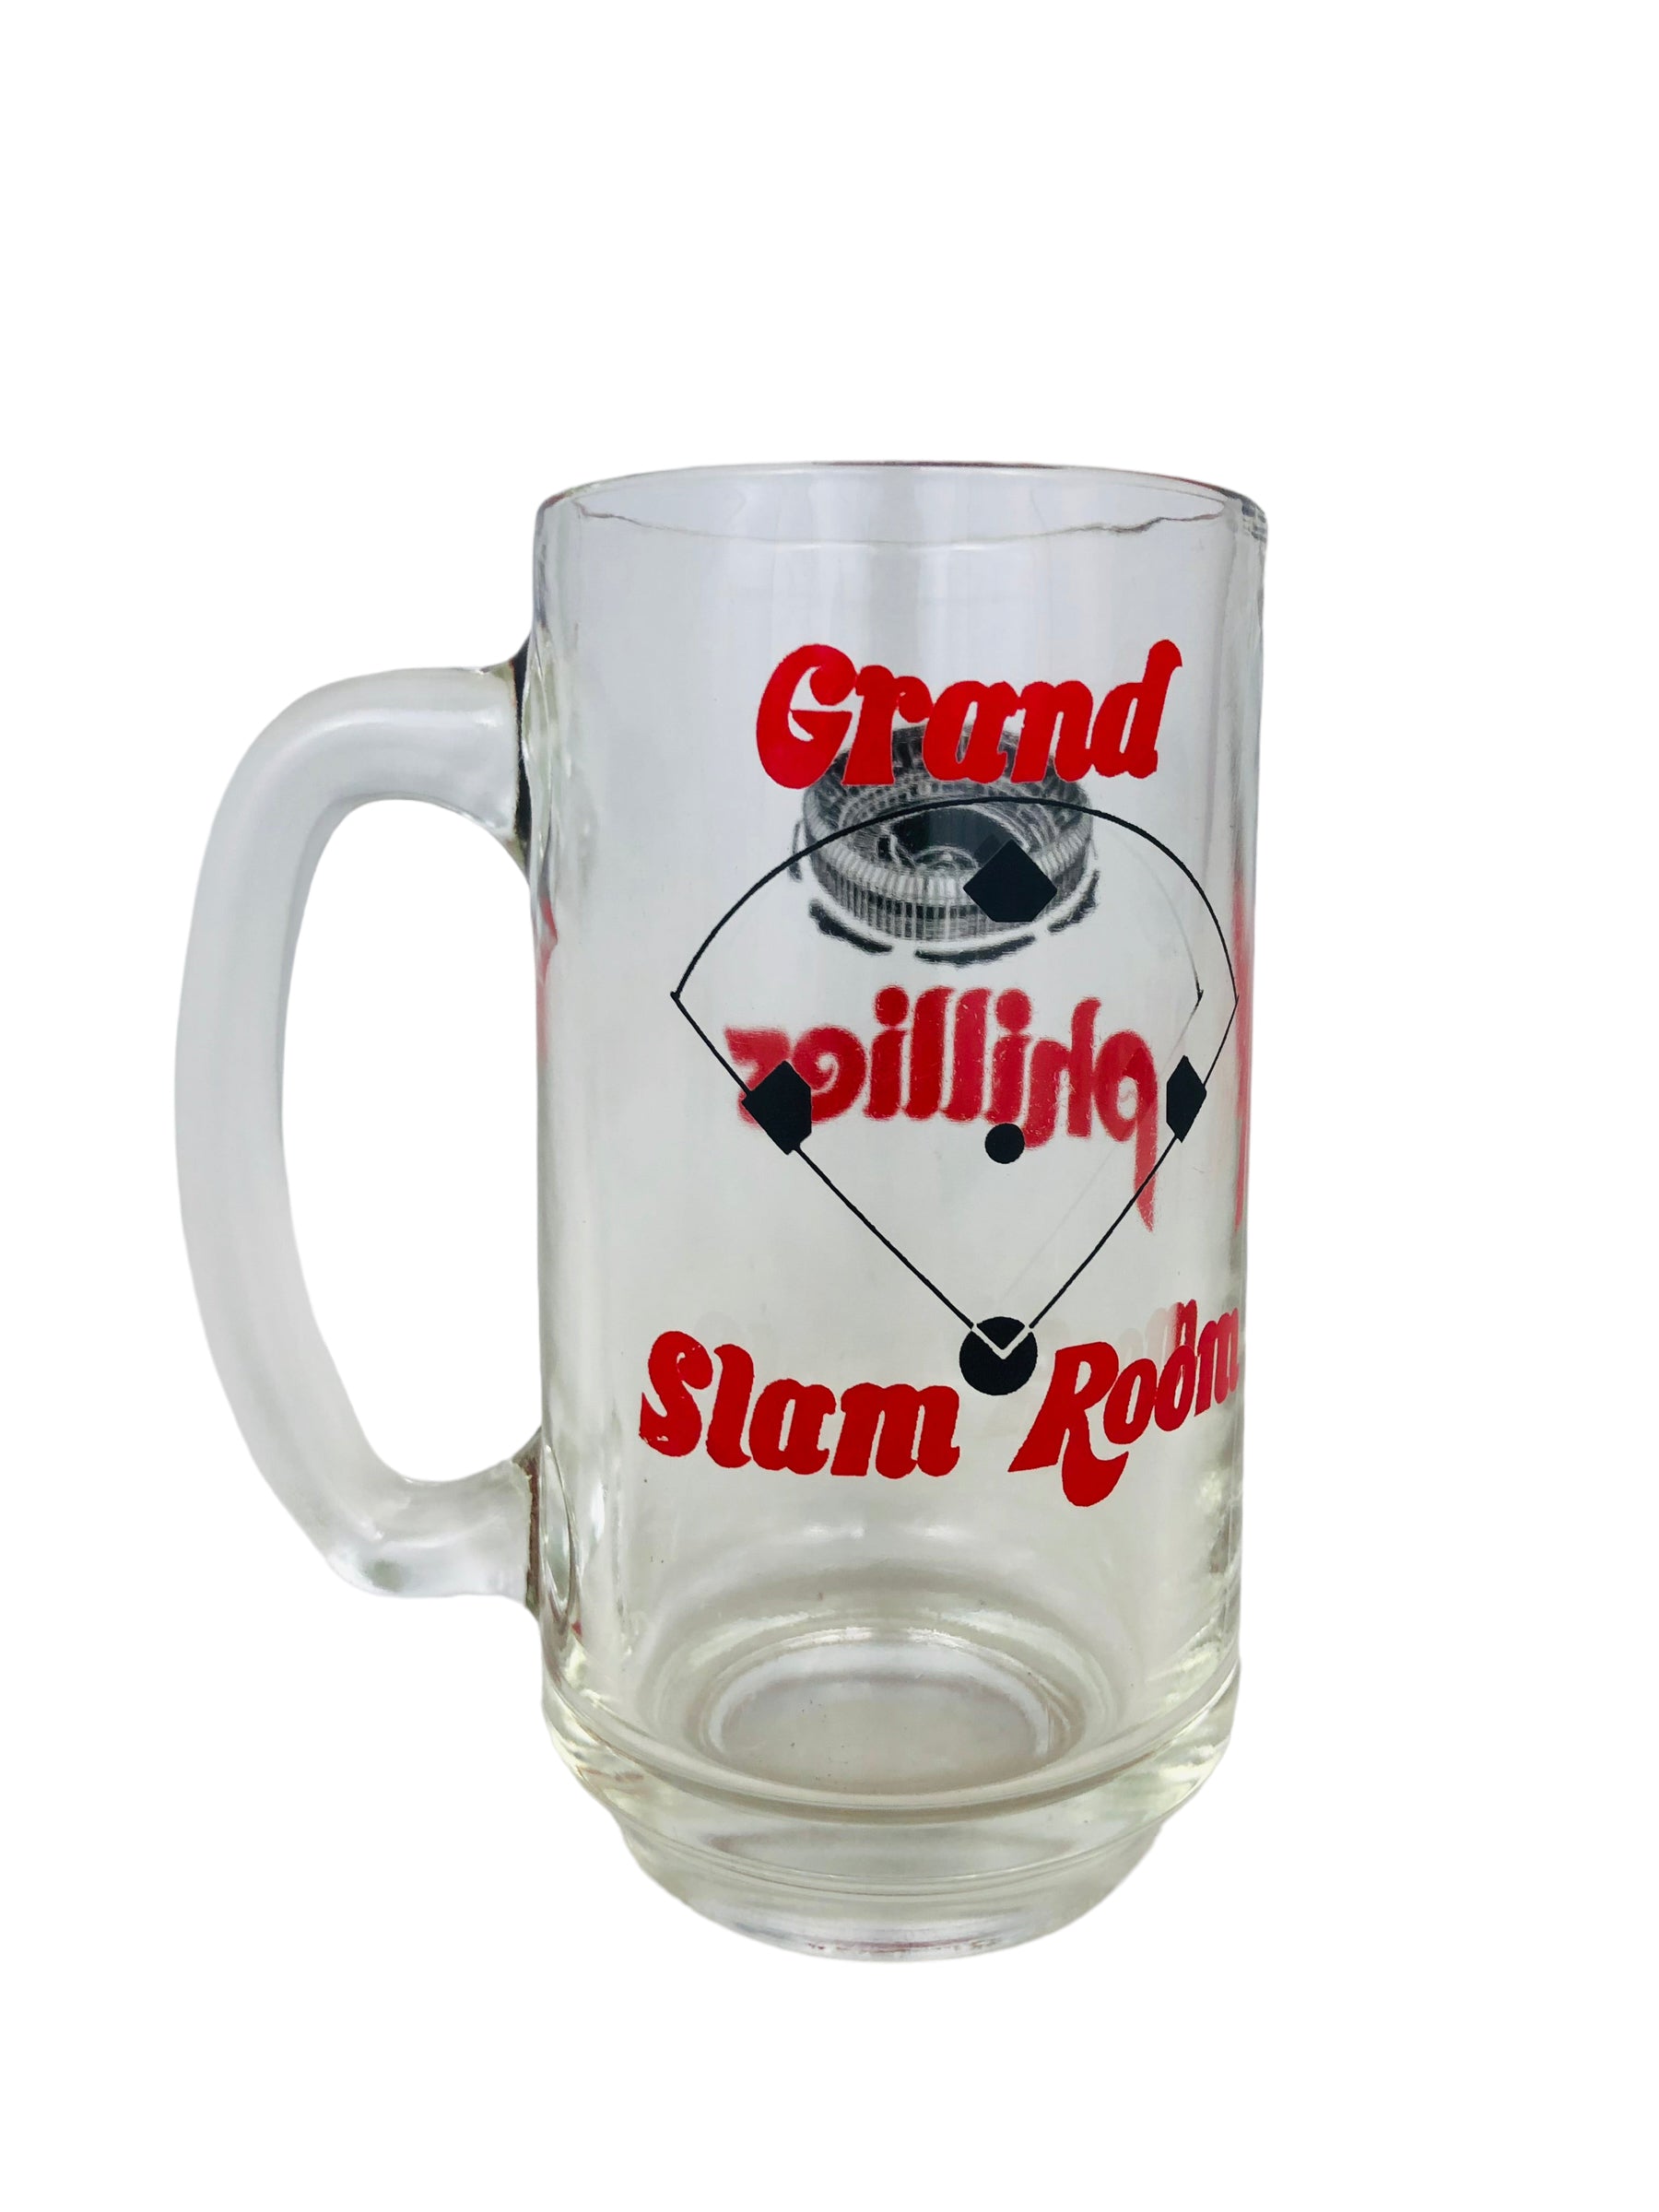 PHILADELPHIA PHILLIES 1980 MLB World Series Champions Gold Trim Beer Stein  Mug